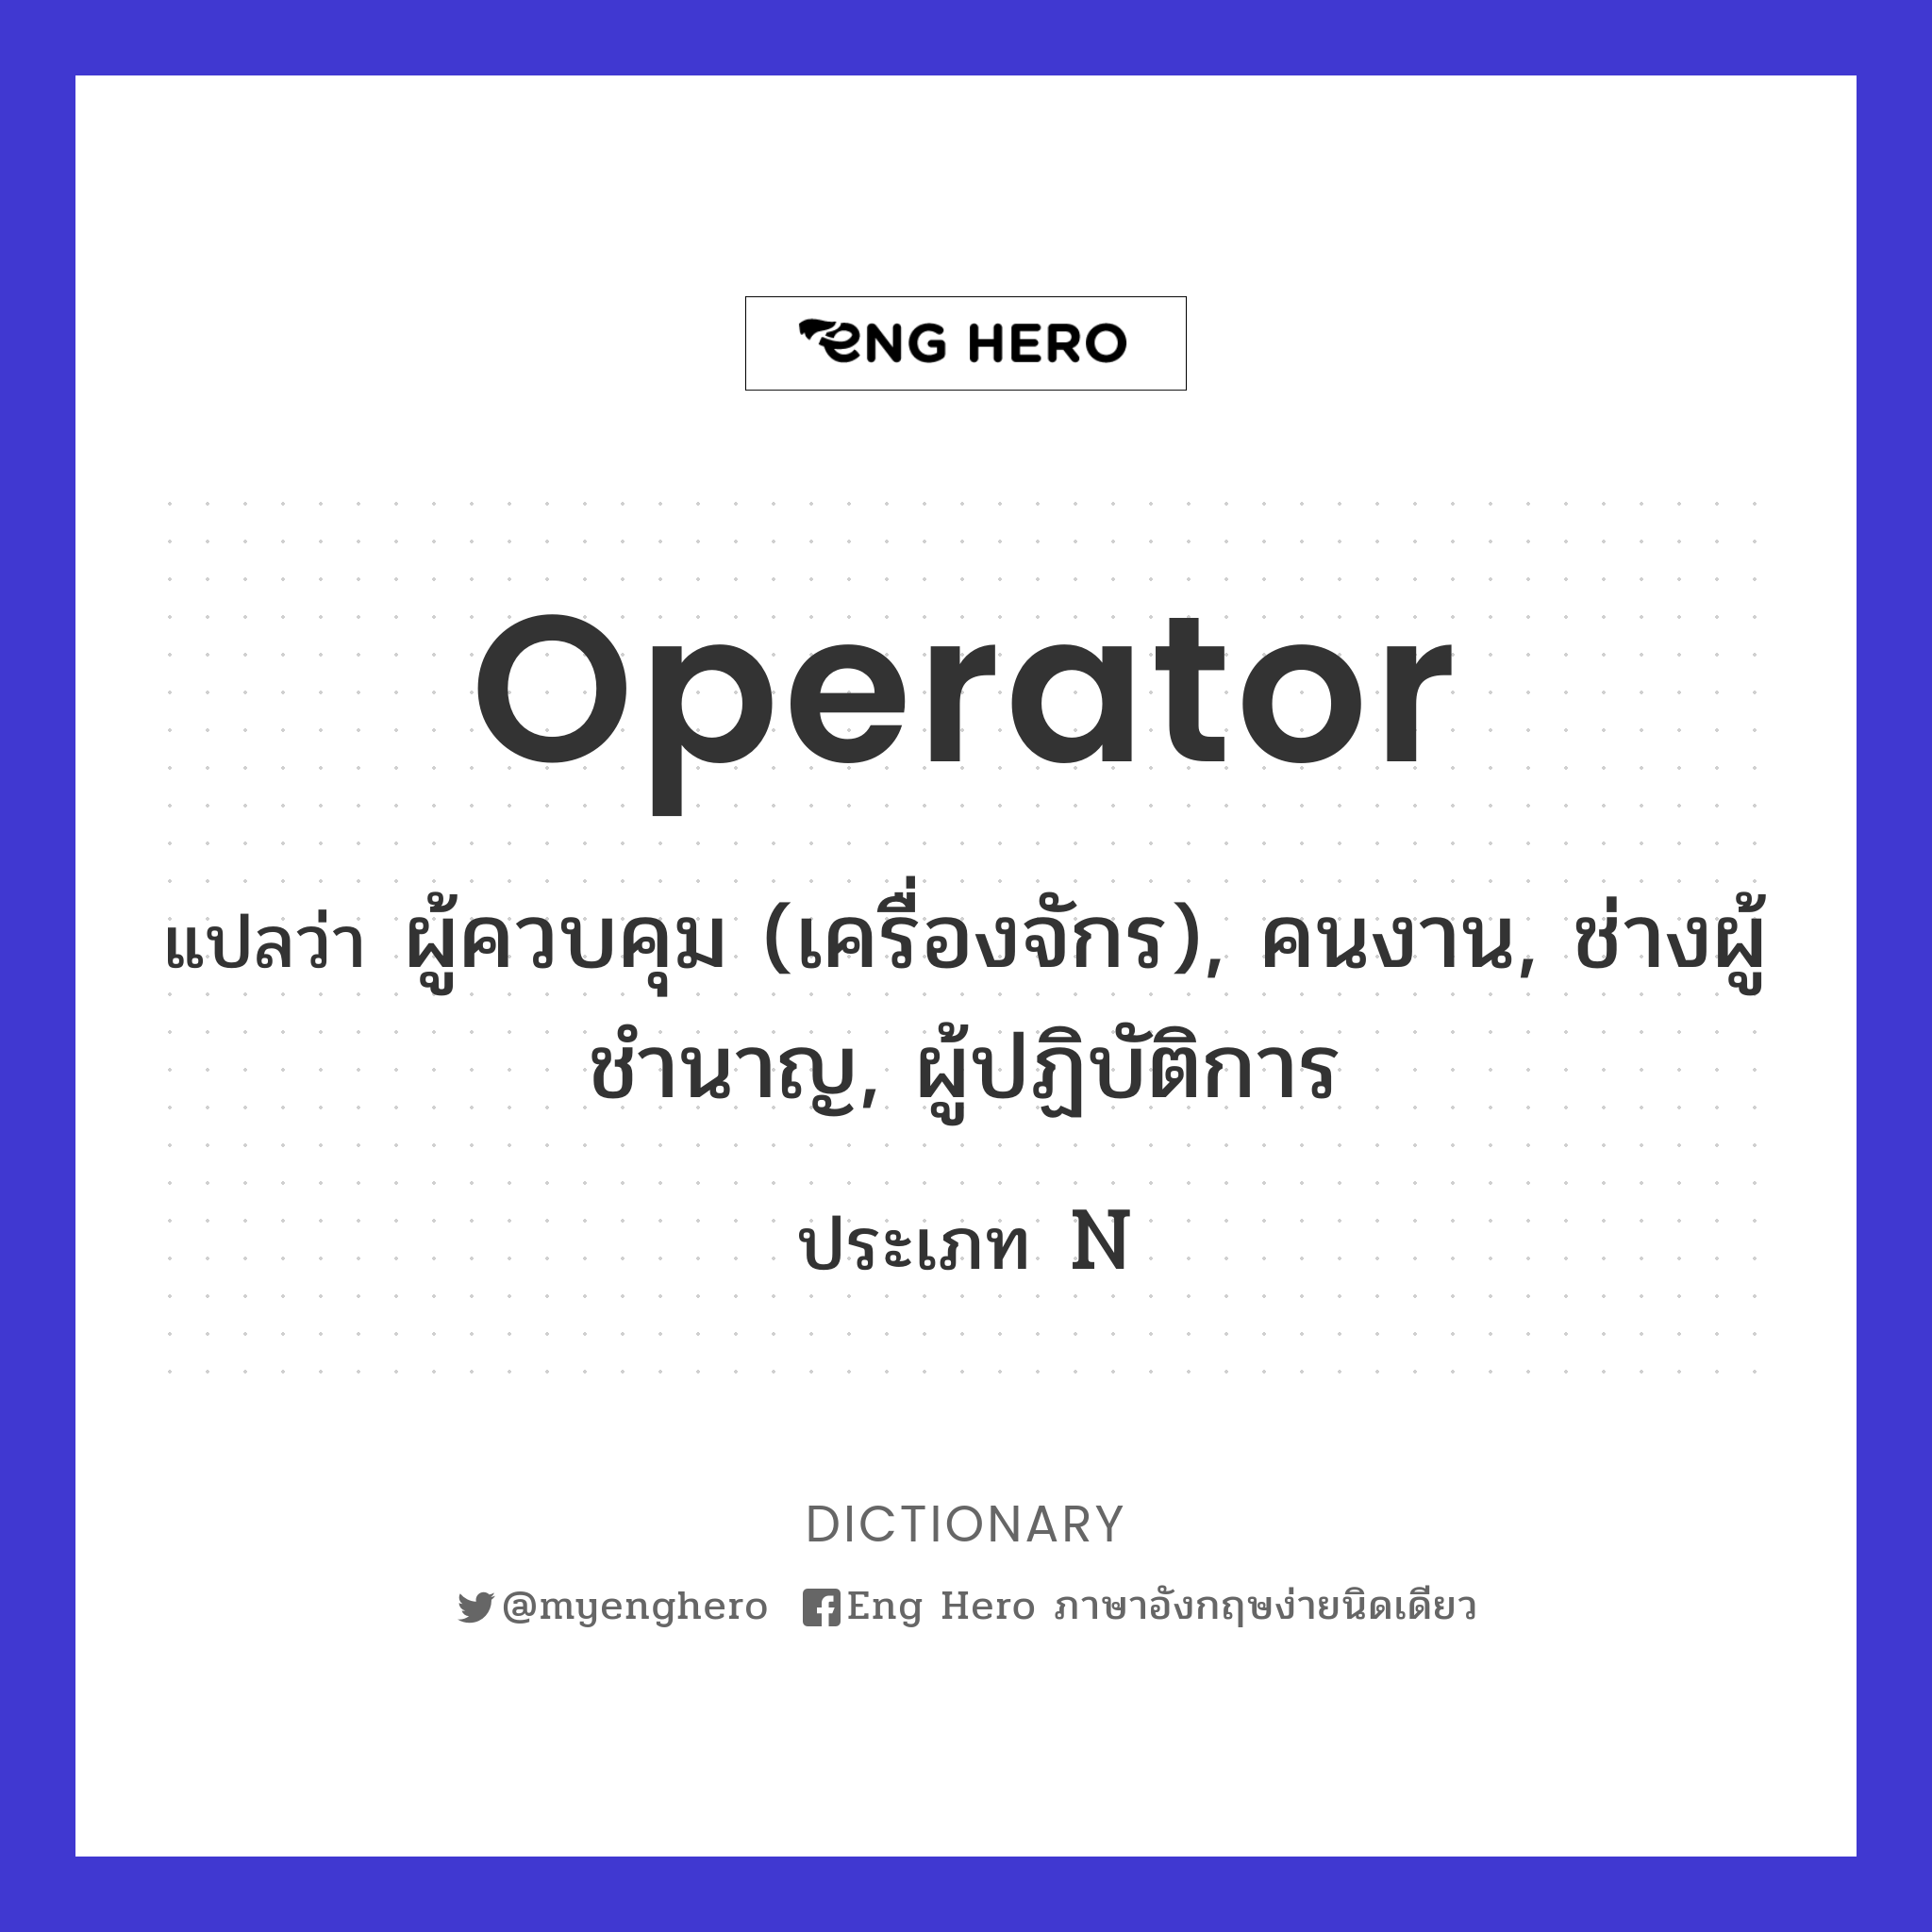 operator